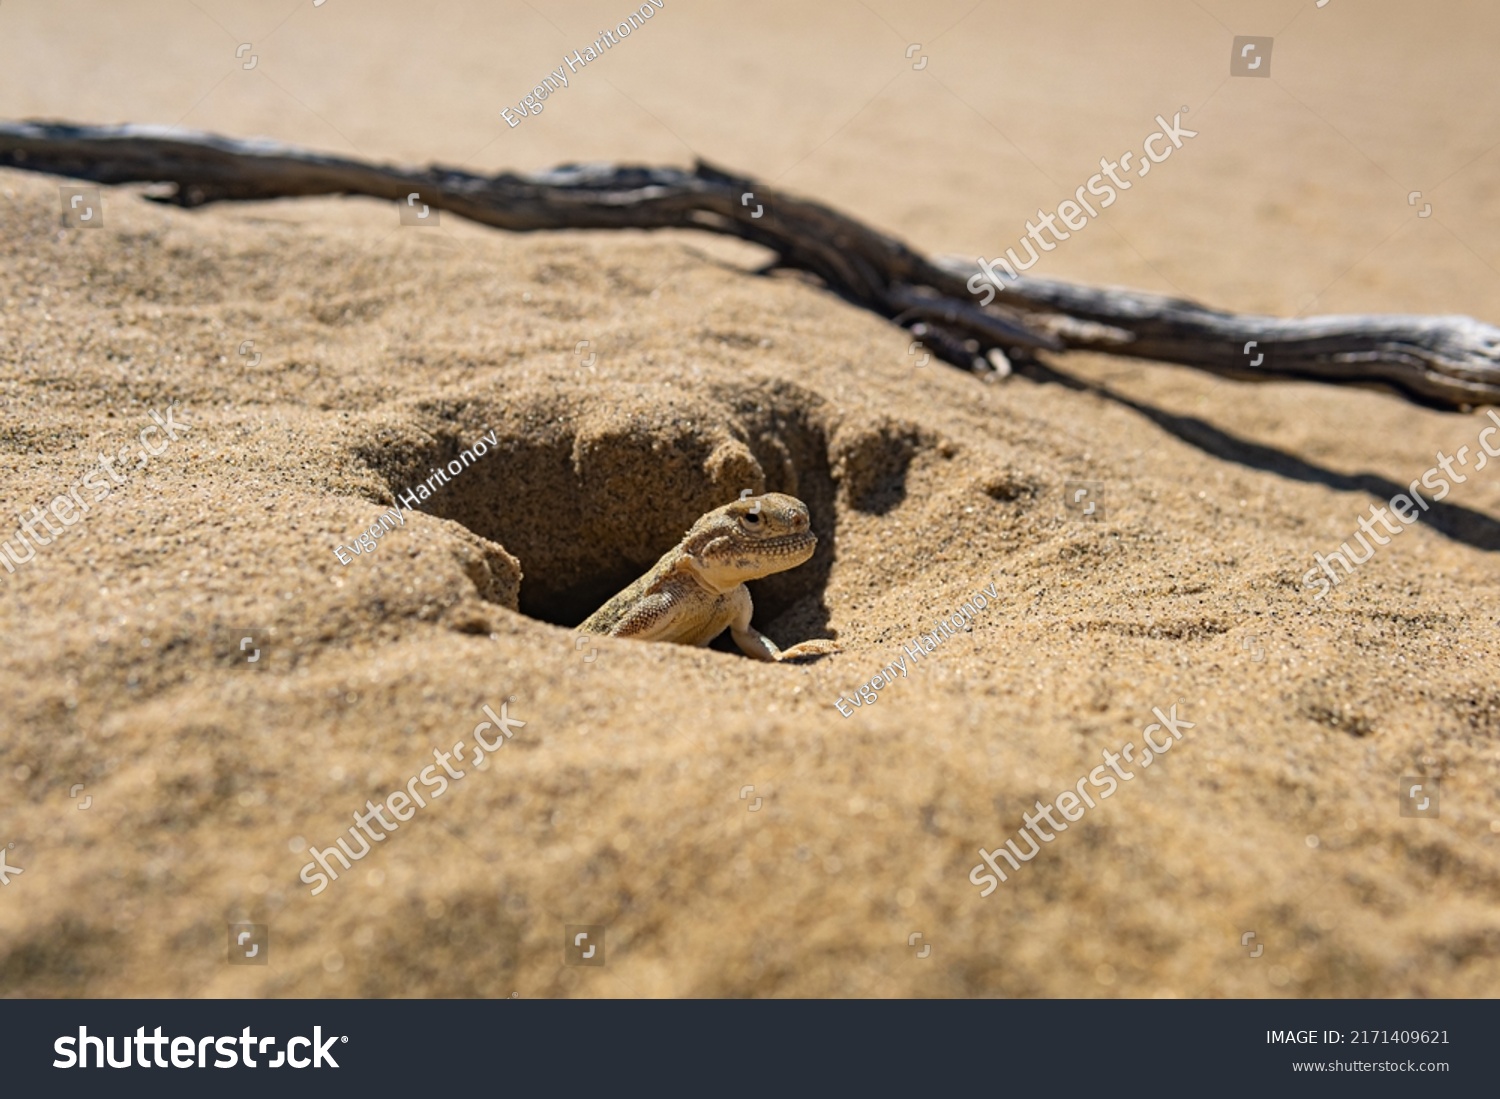 toadhead agama lizard in its burrow in the sand of the desert #2171409621